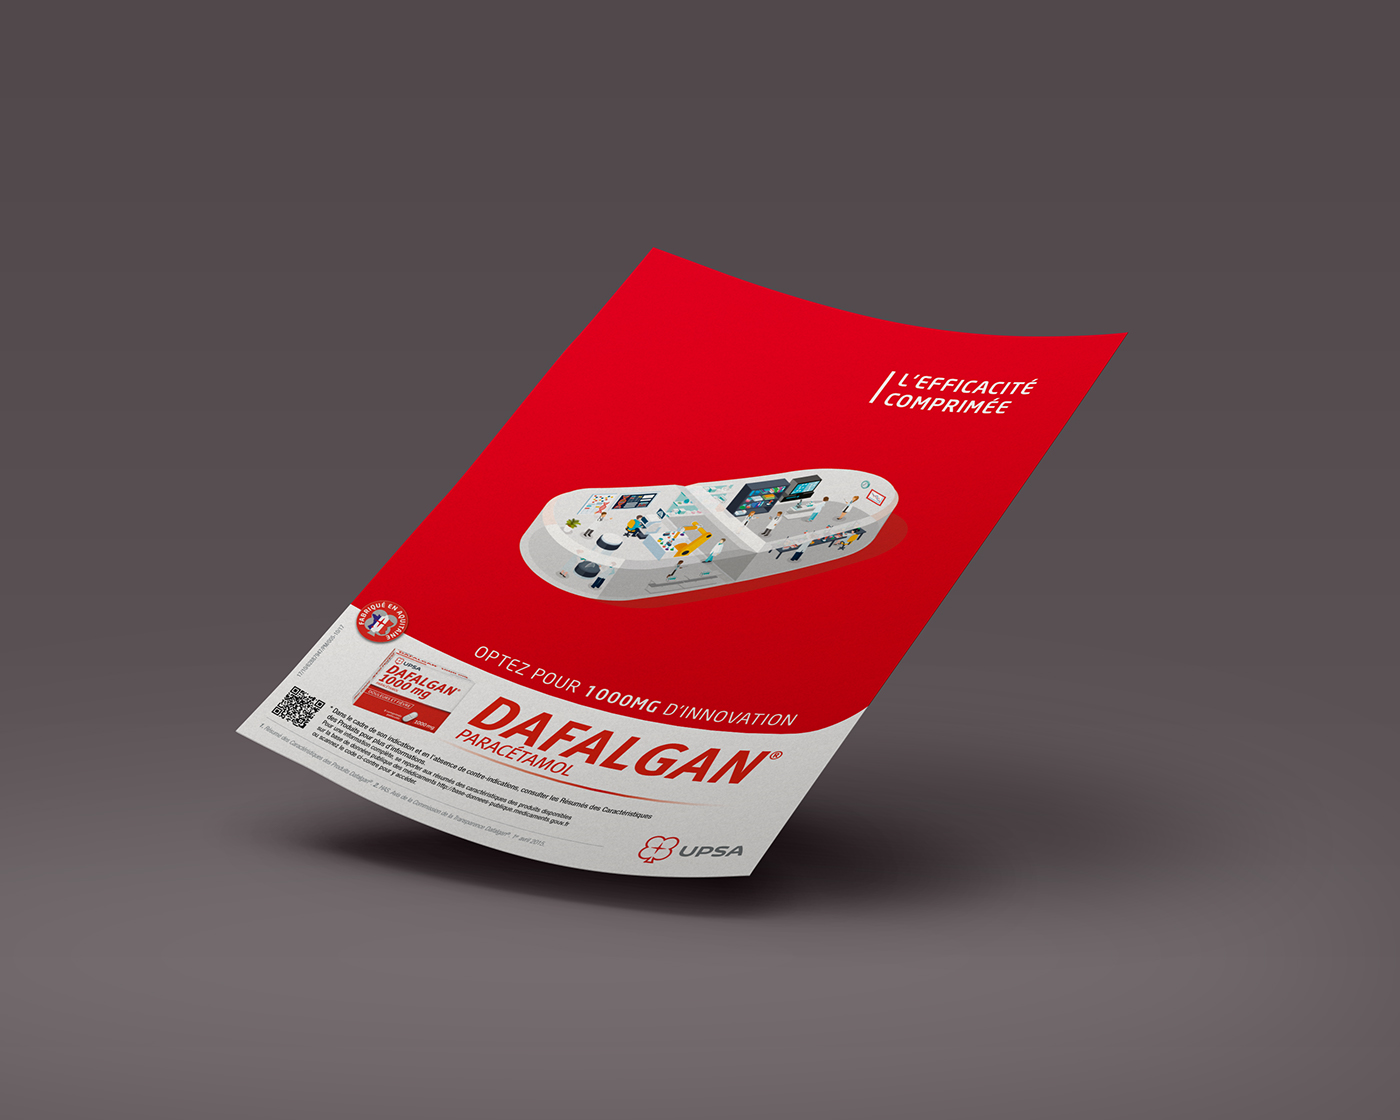 UPSA Dafalgan 1000mg paracetamol medical Pharma rouge